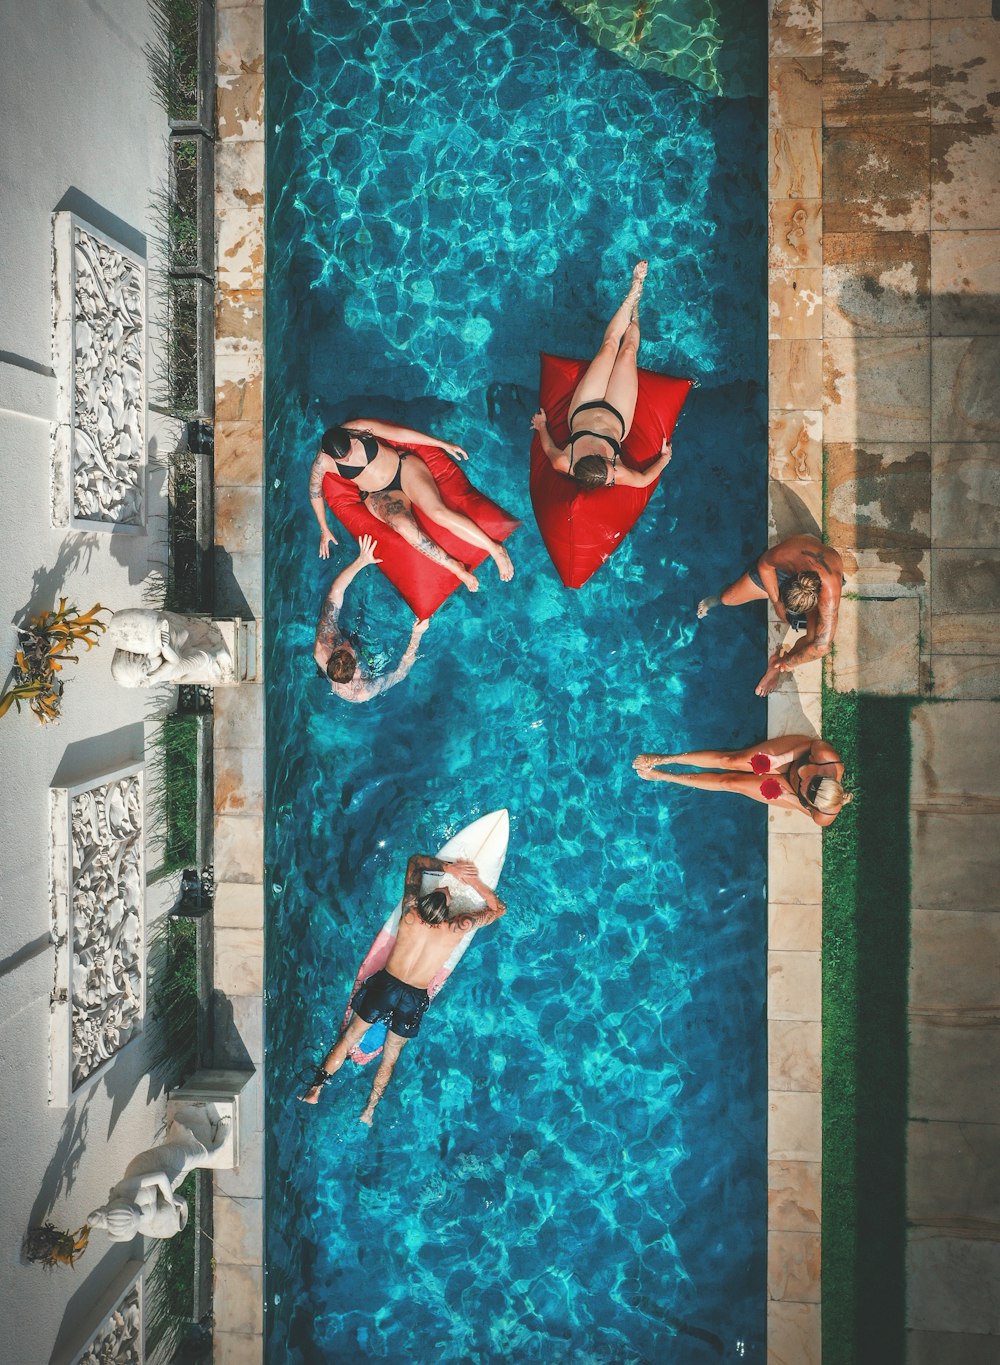 people in pool